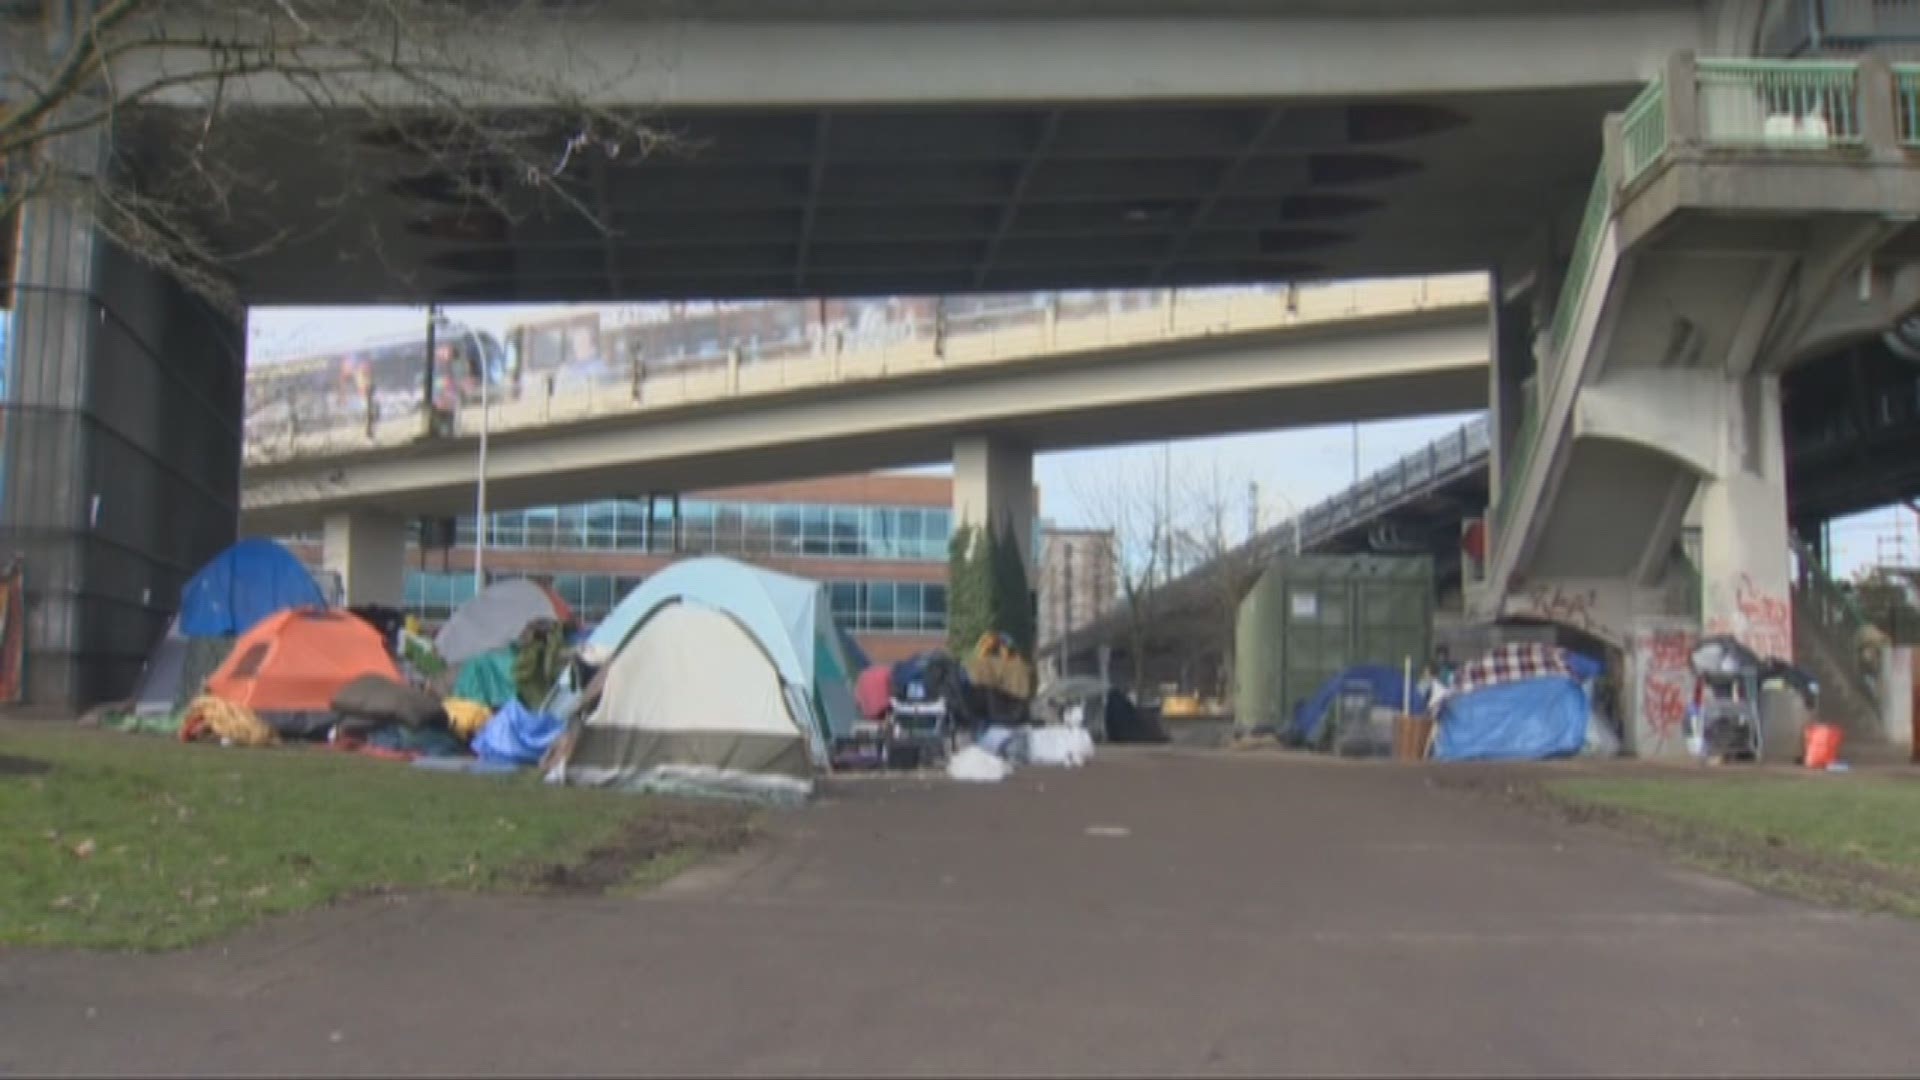 Homeless Under Steel Bridge Told To Leave